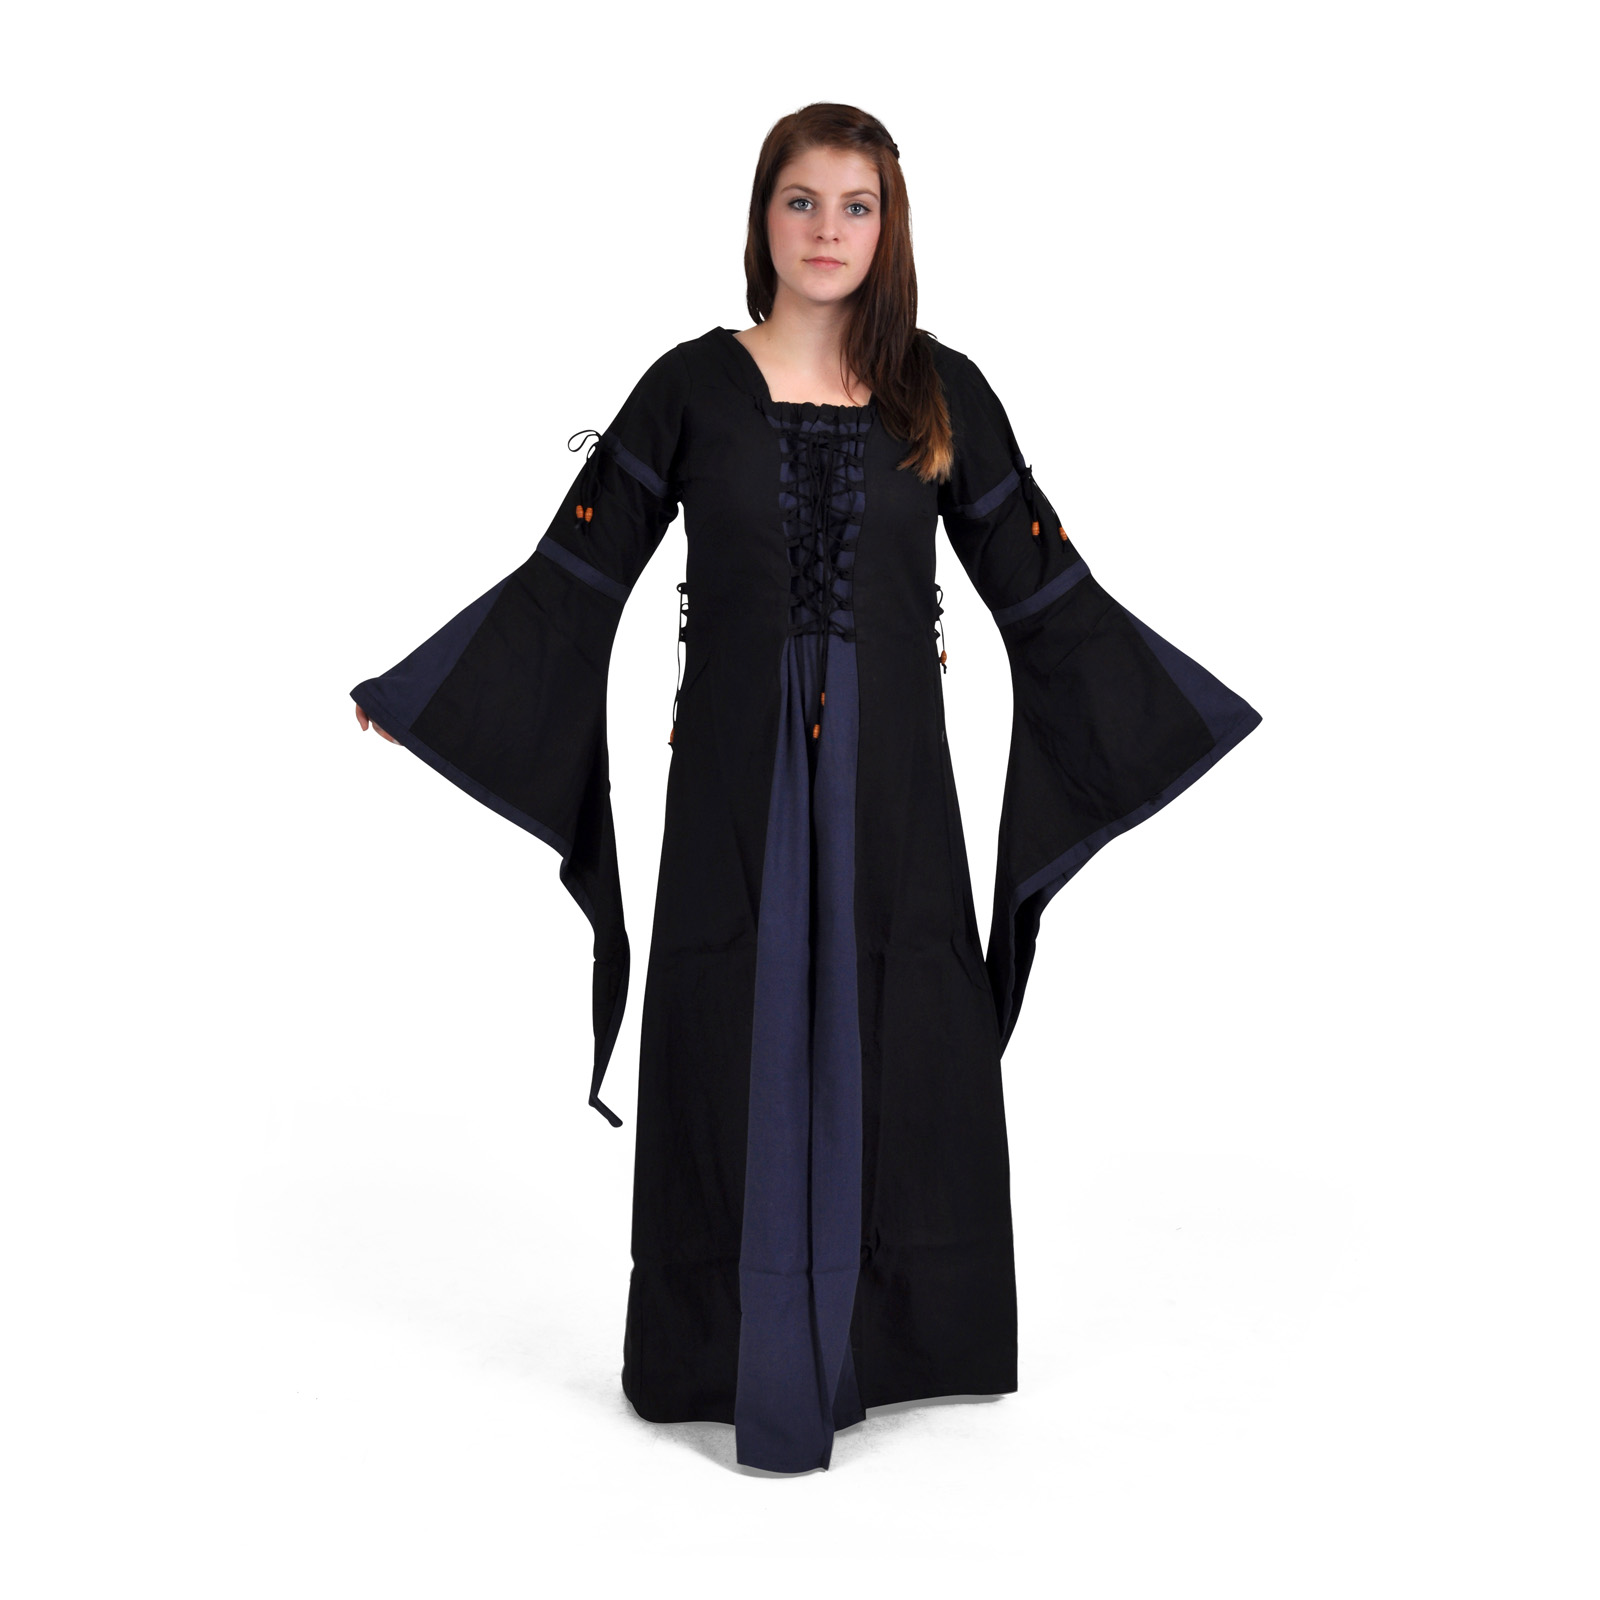 Elisa - Mittelalterkleid schwarz-blau